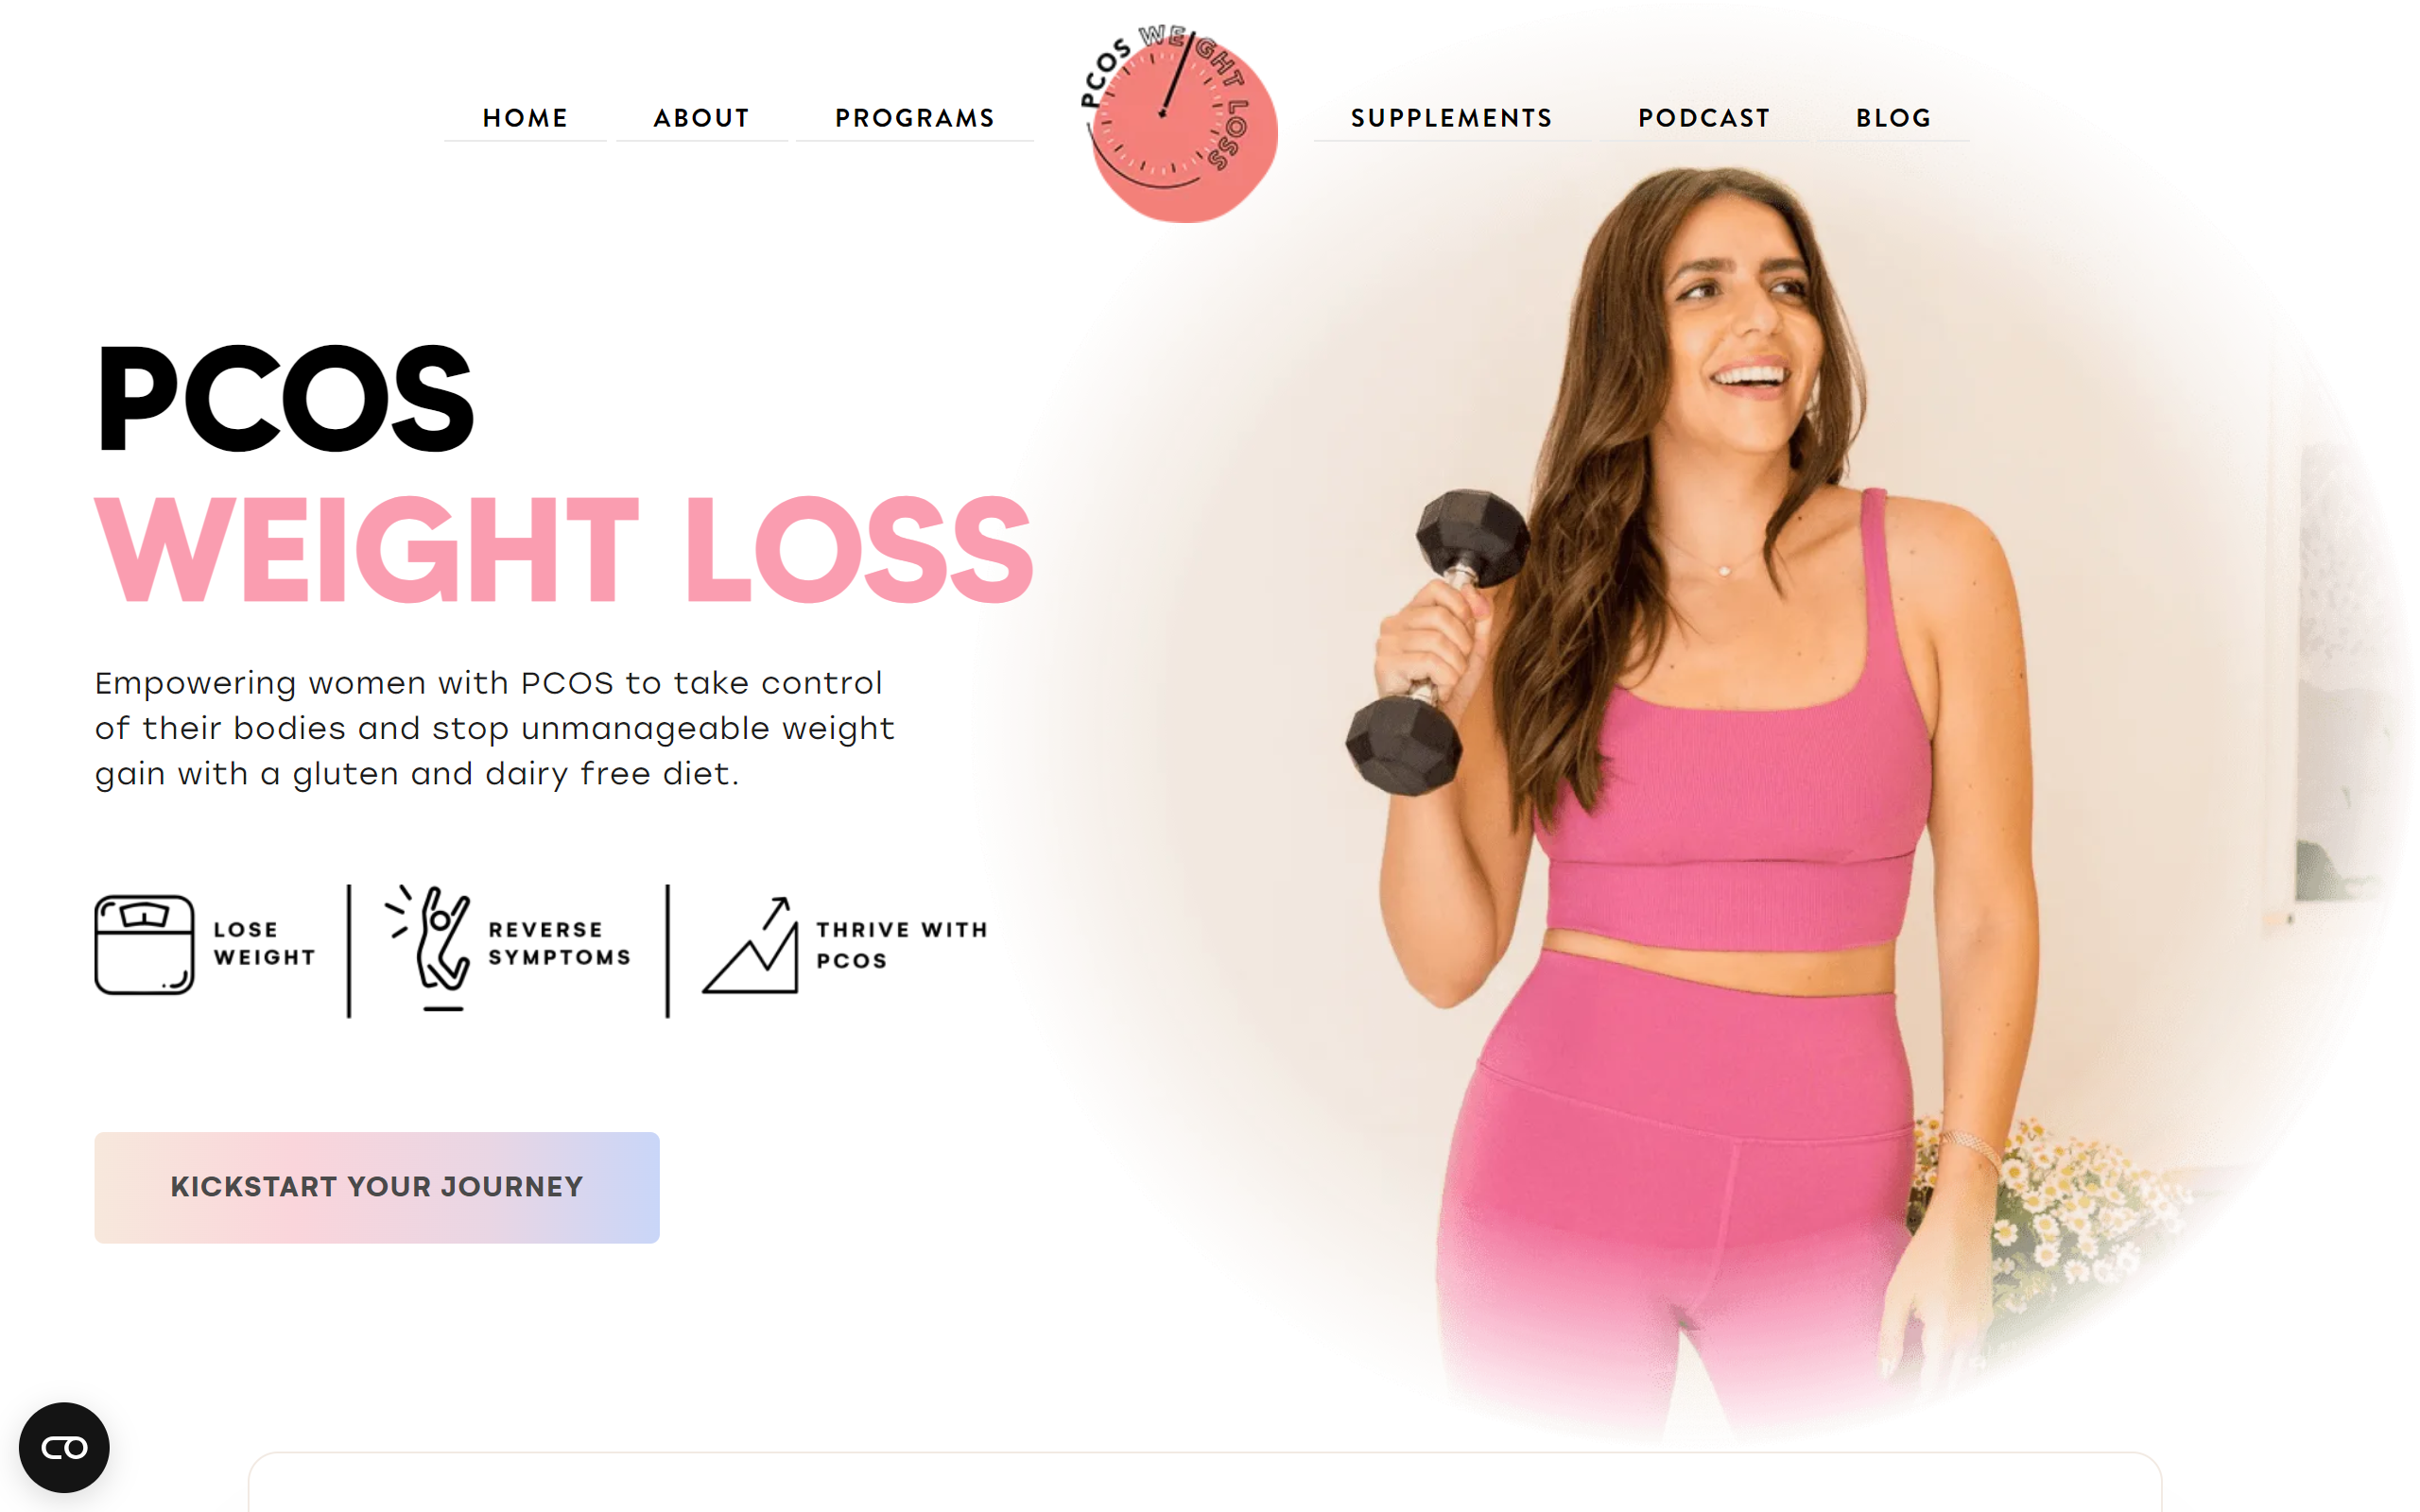 PCOS Weight Loss Blog weight loss blog 